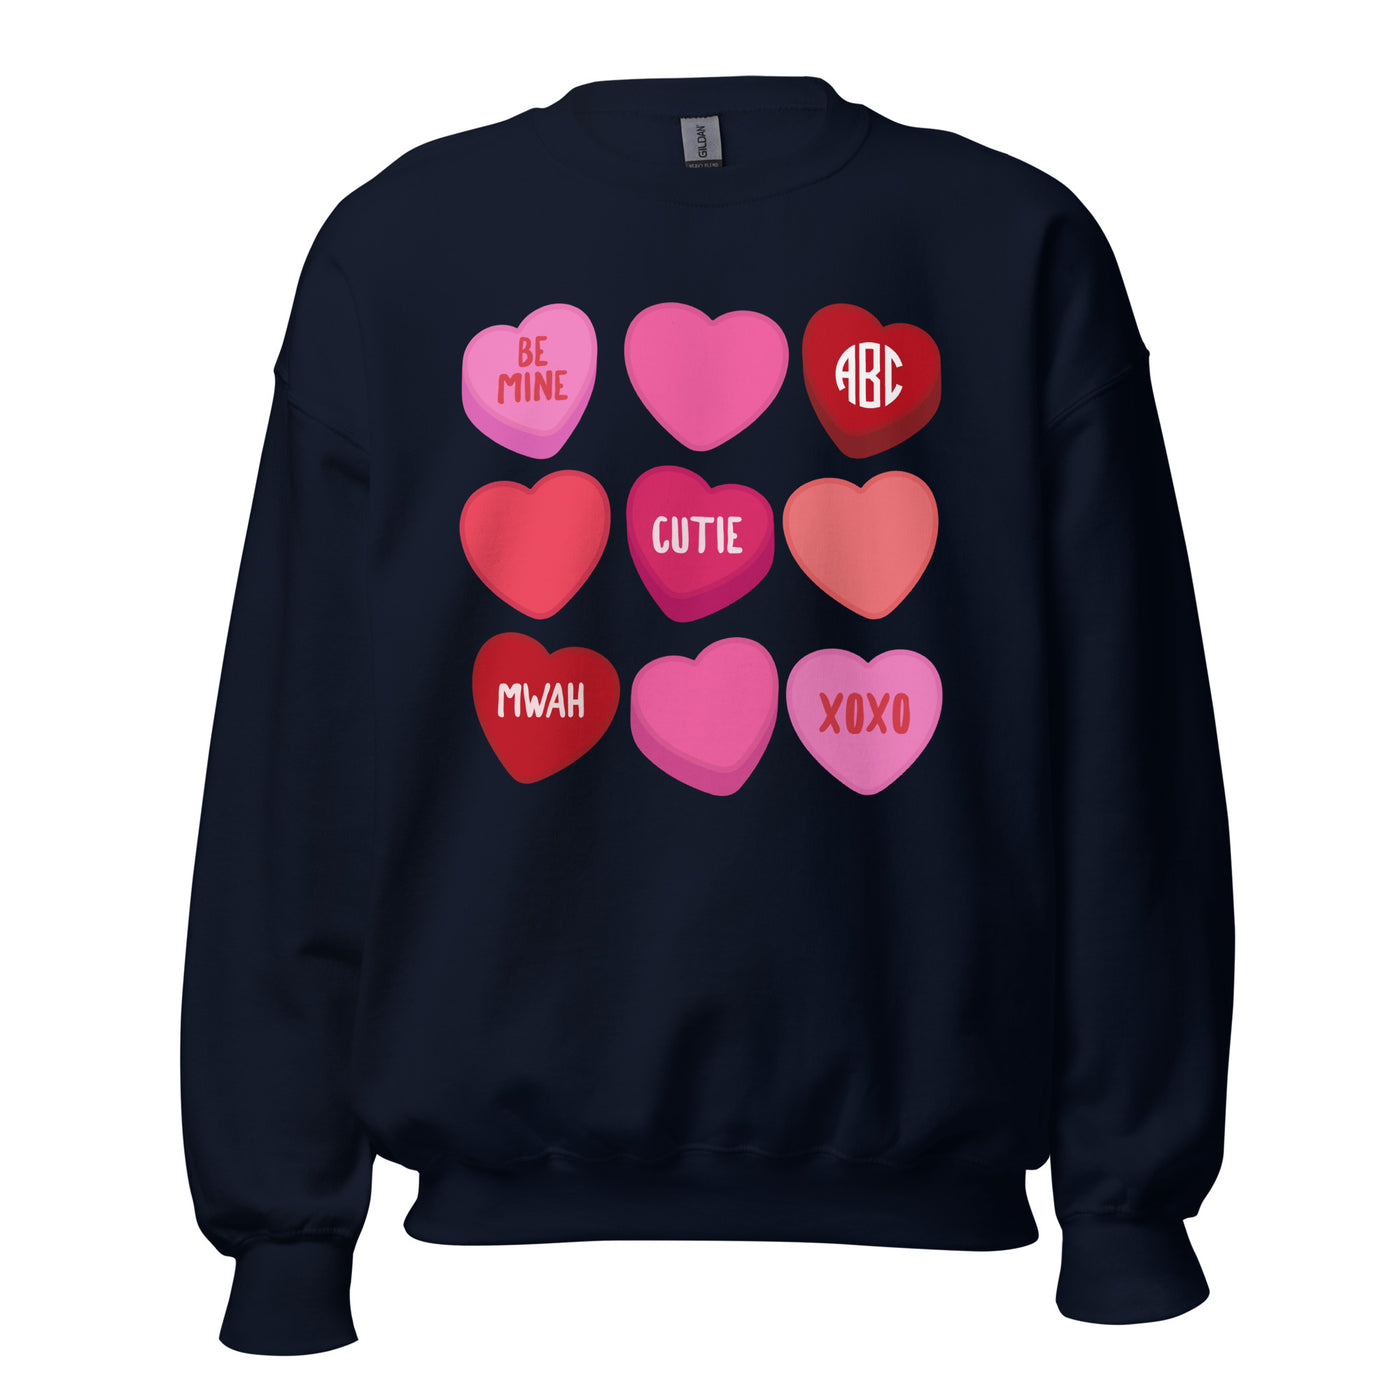 Monogrammed 'Candy Hearts' 2nd Edition Sweatshirt